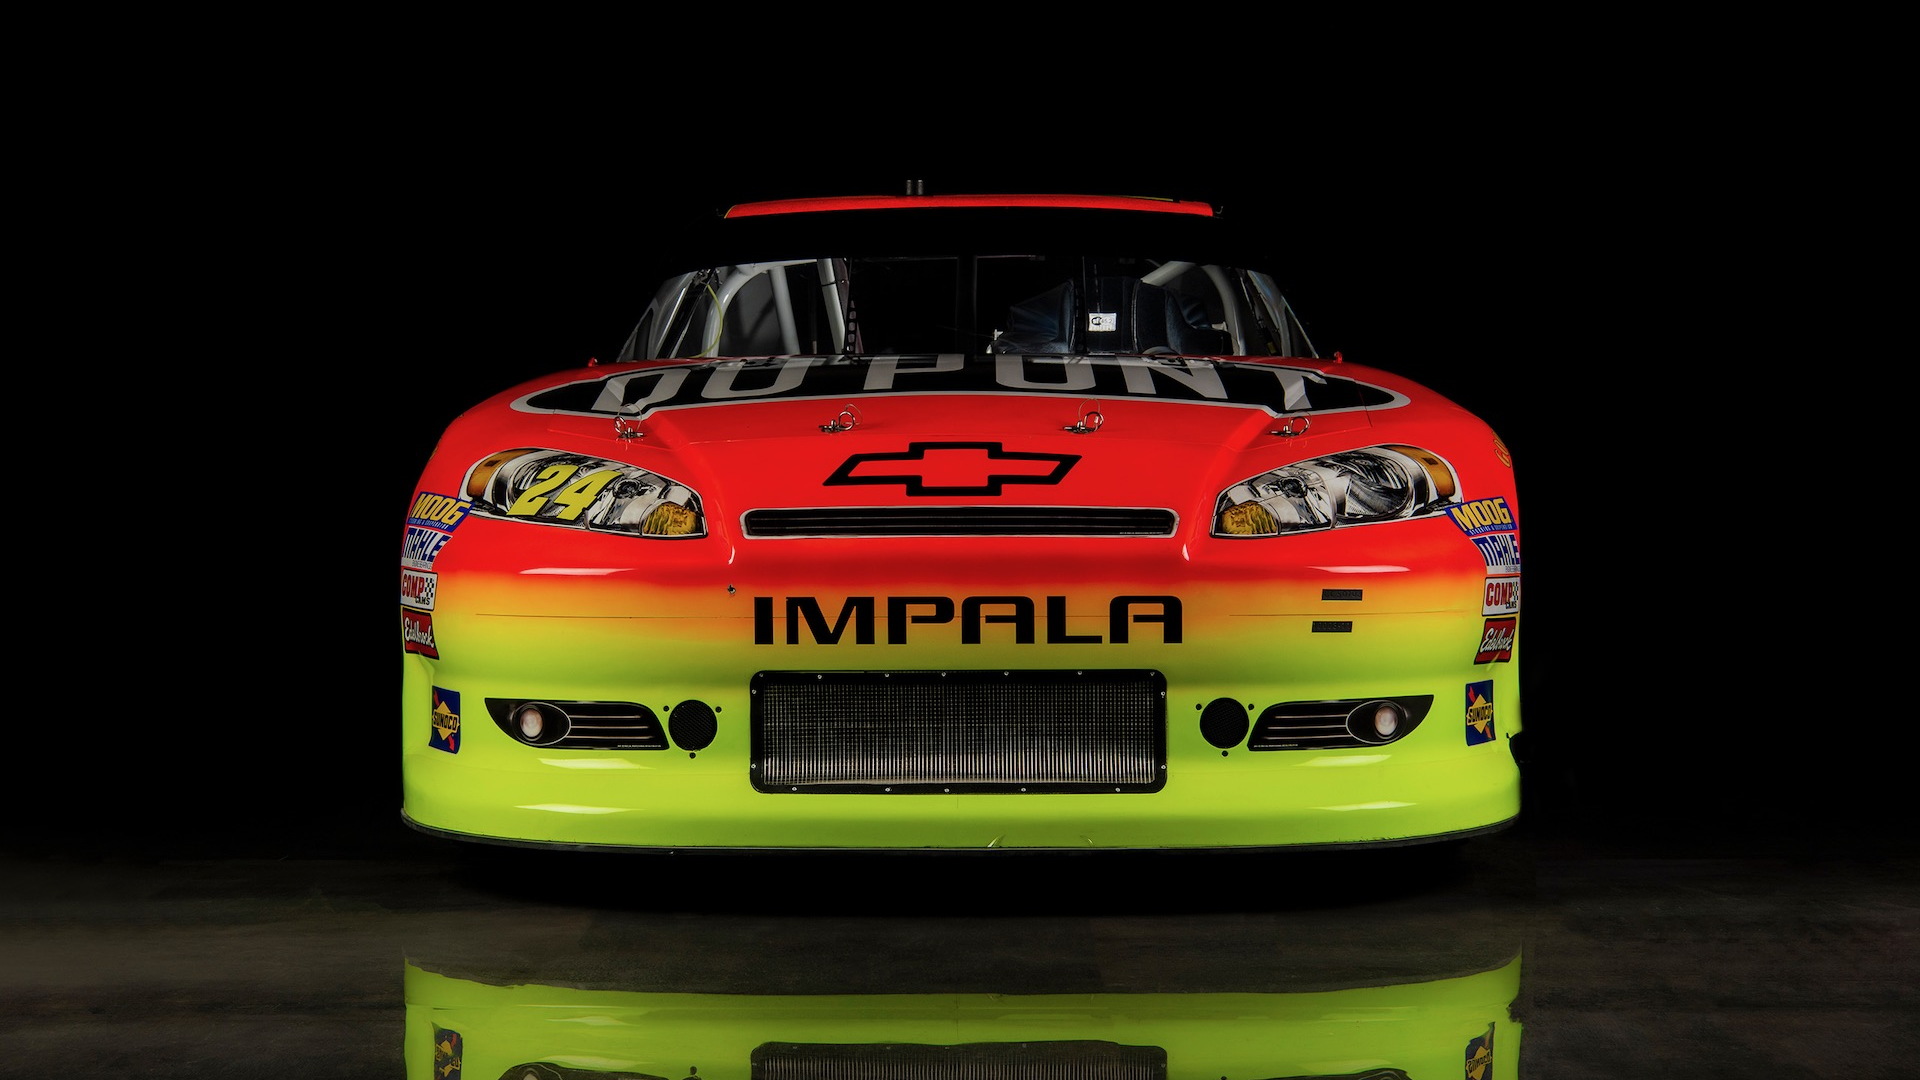 2011 Chevrolet Impala NASCAR Cup car driven by Jeff Gordon (photo via Speedart Motorsports)